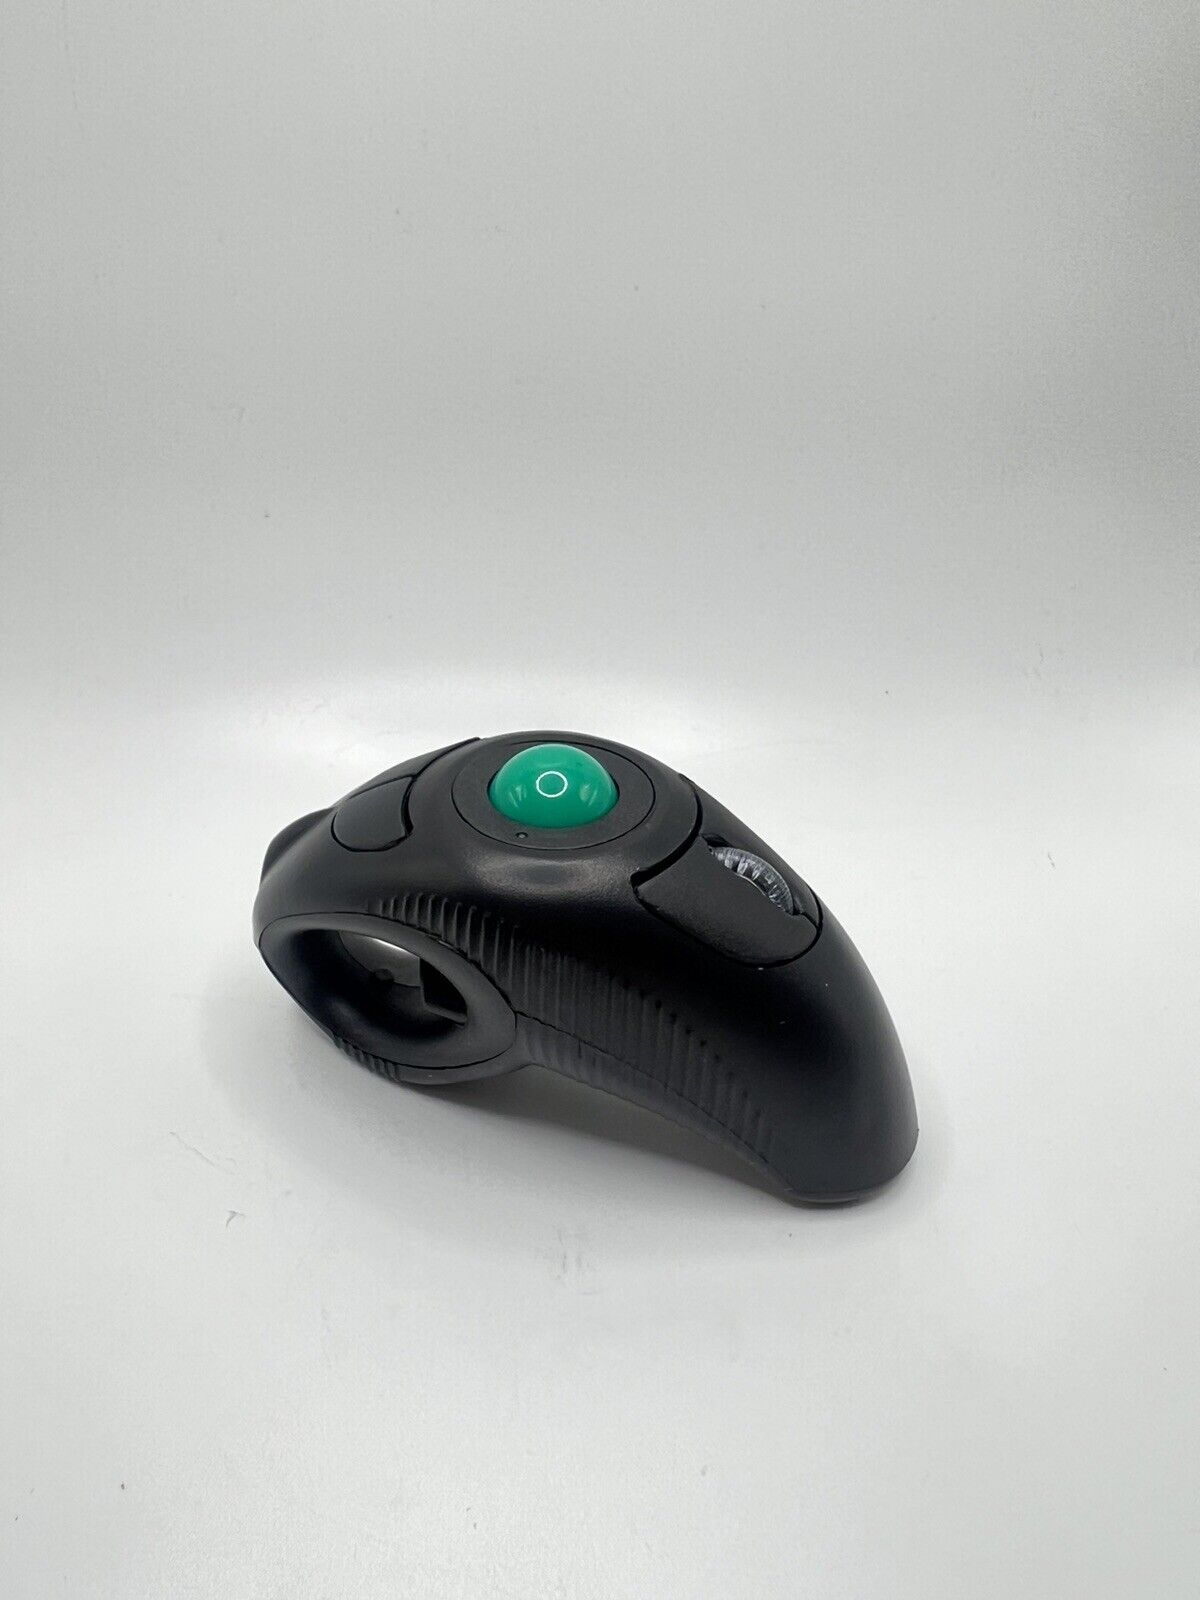 Finger Using Optical Mini Portable Trackball Wireless USB Handheld Mouse Mice